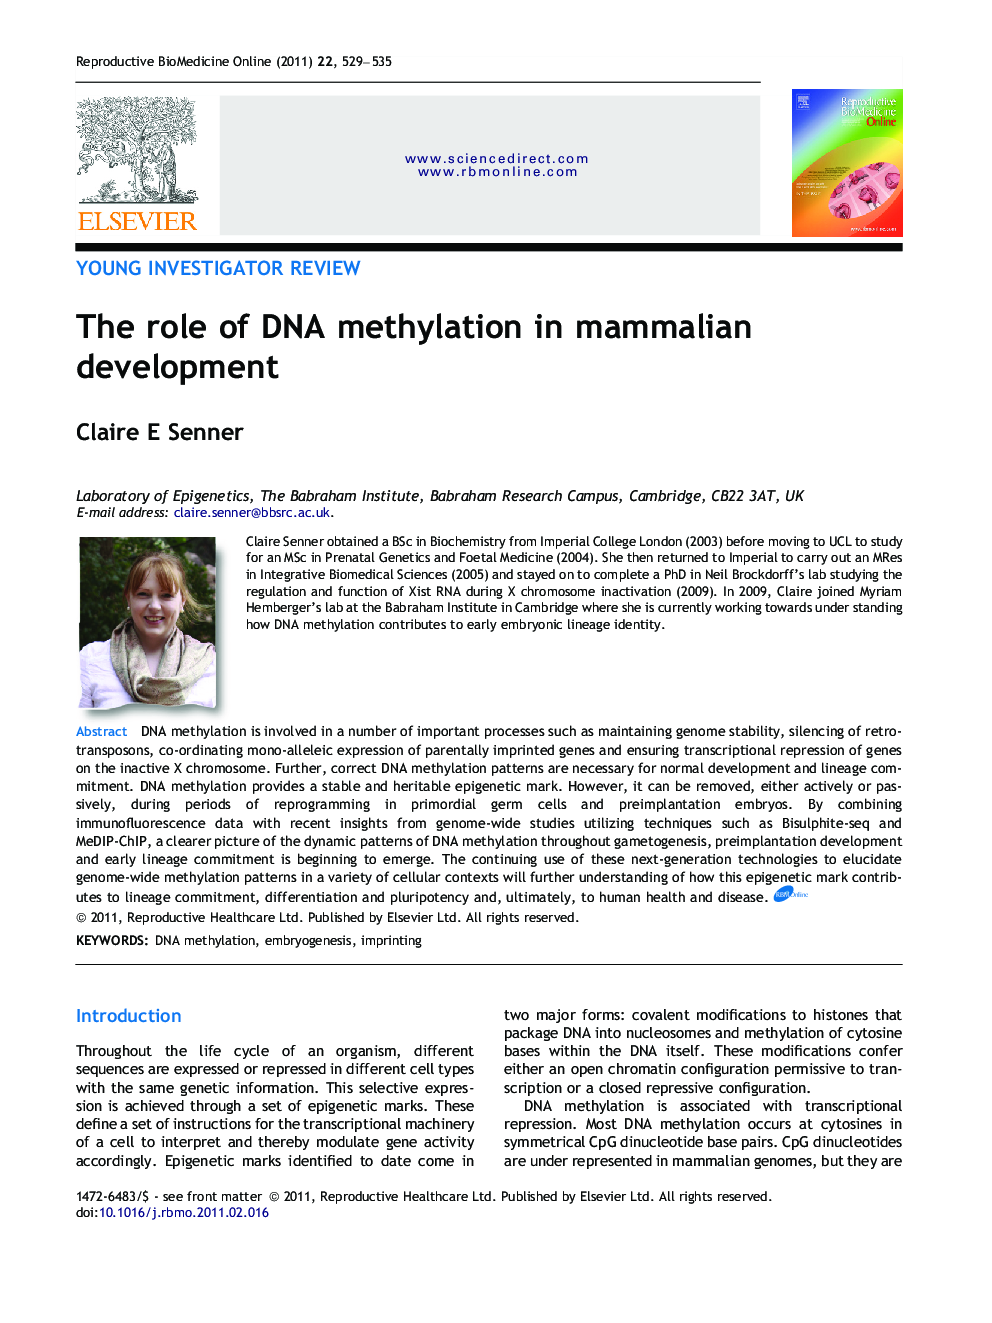 The role of DNA methylation in mammalian development 